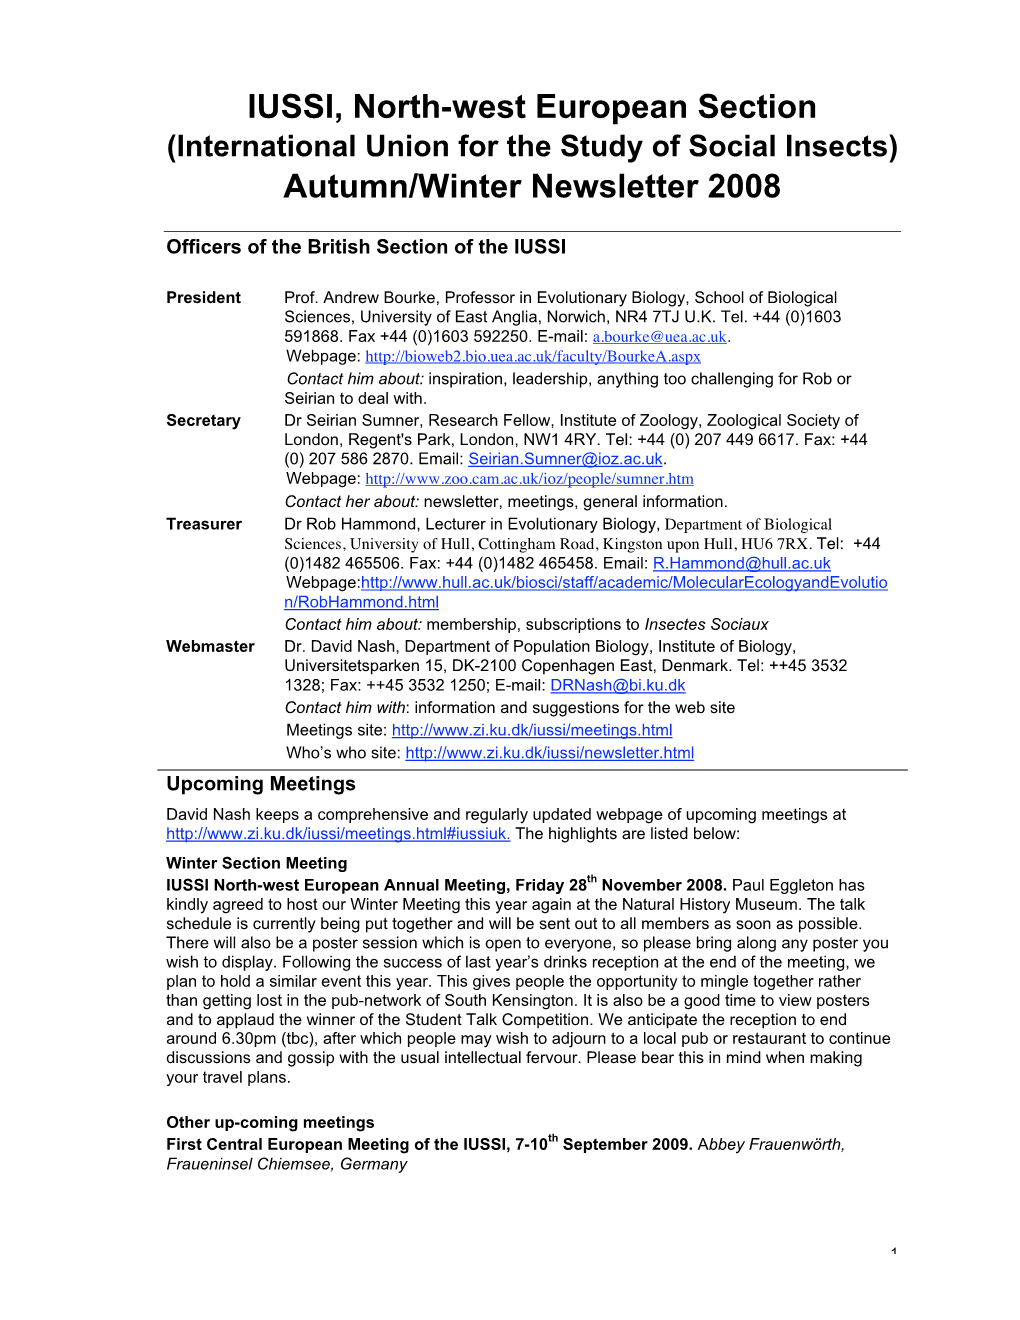 IUSSI, North-West European Section Autumn/Winter Newsletter 2008